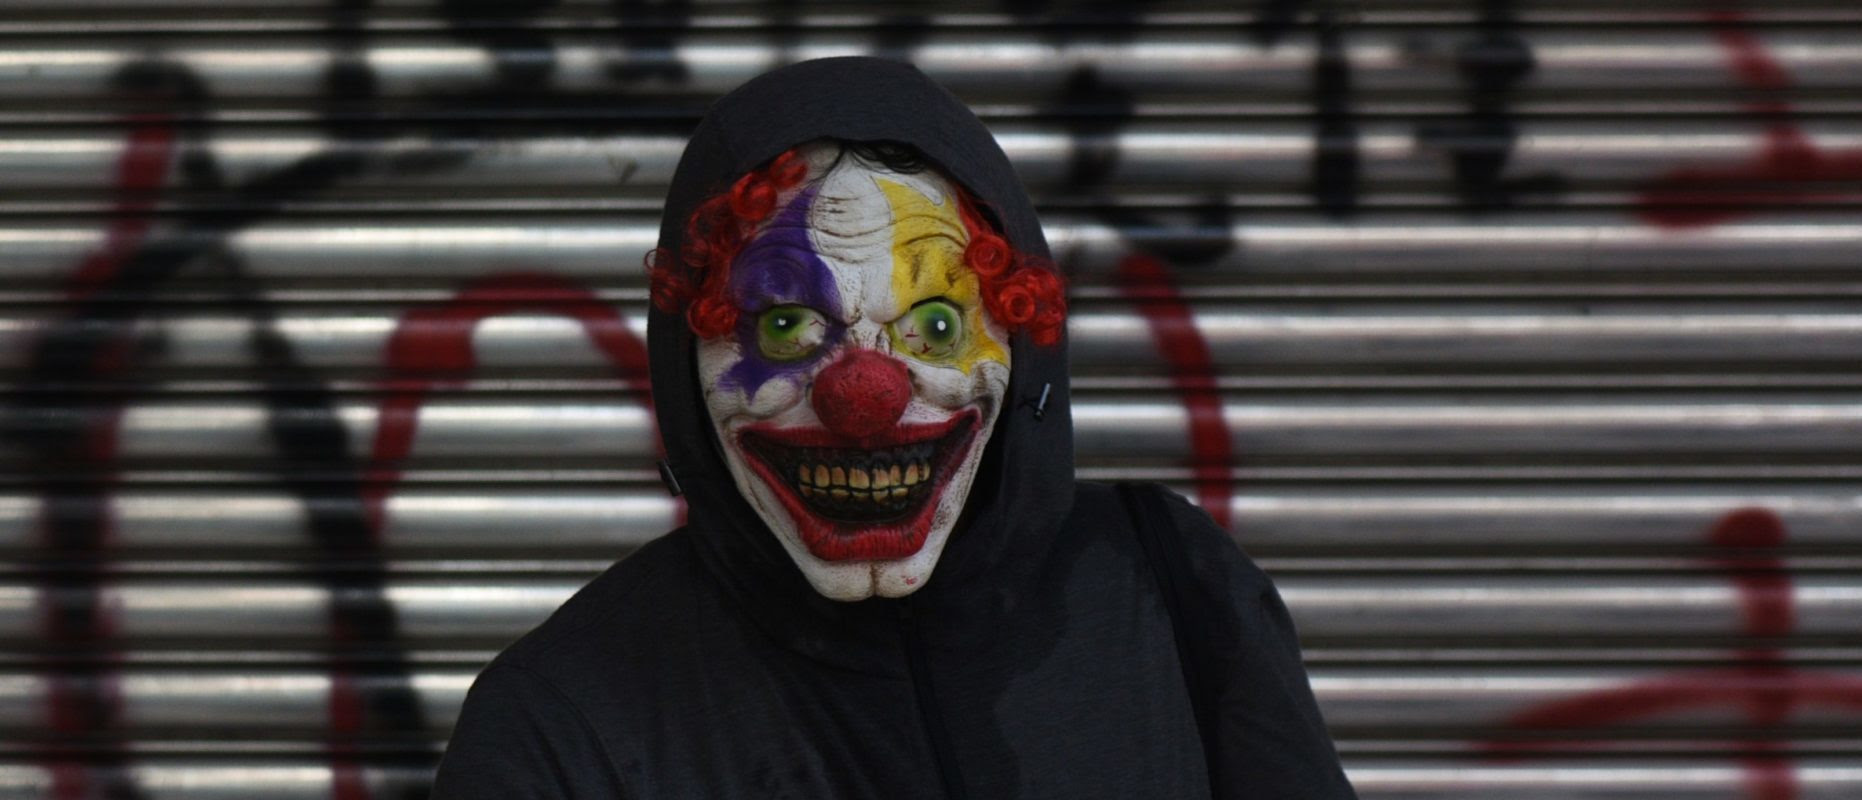 Man Dressed As Clown Wielding Machete Arrested In Botched Drug Deal